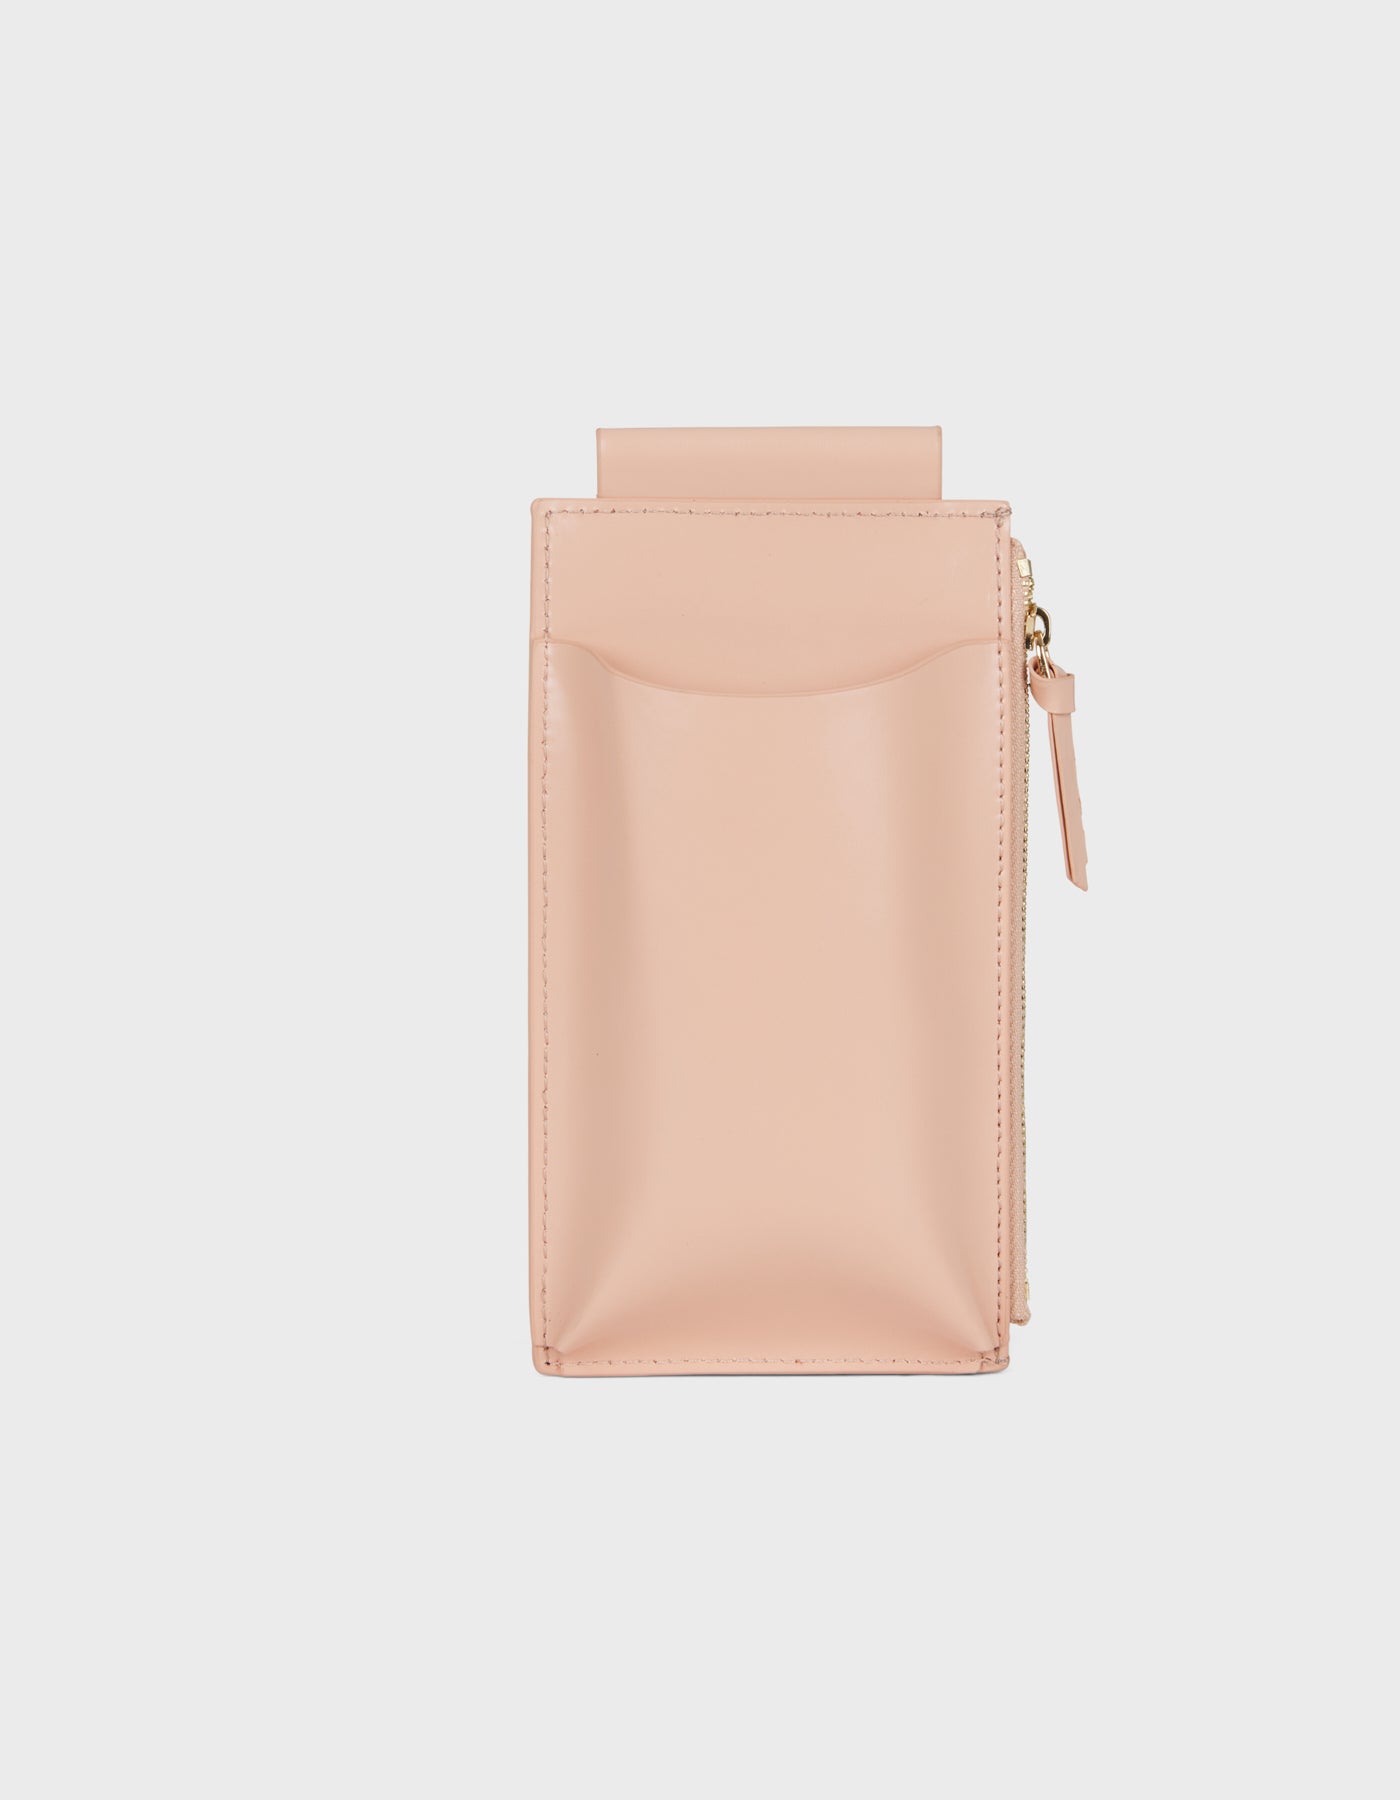 HiVa Atelier - Crossbody Phone Bag Peach Sand